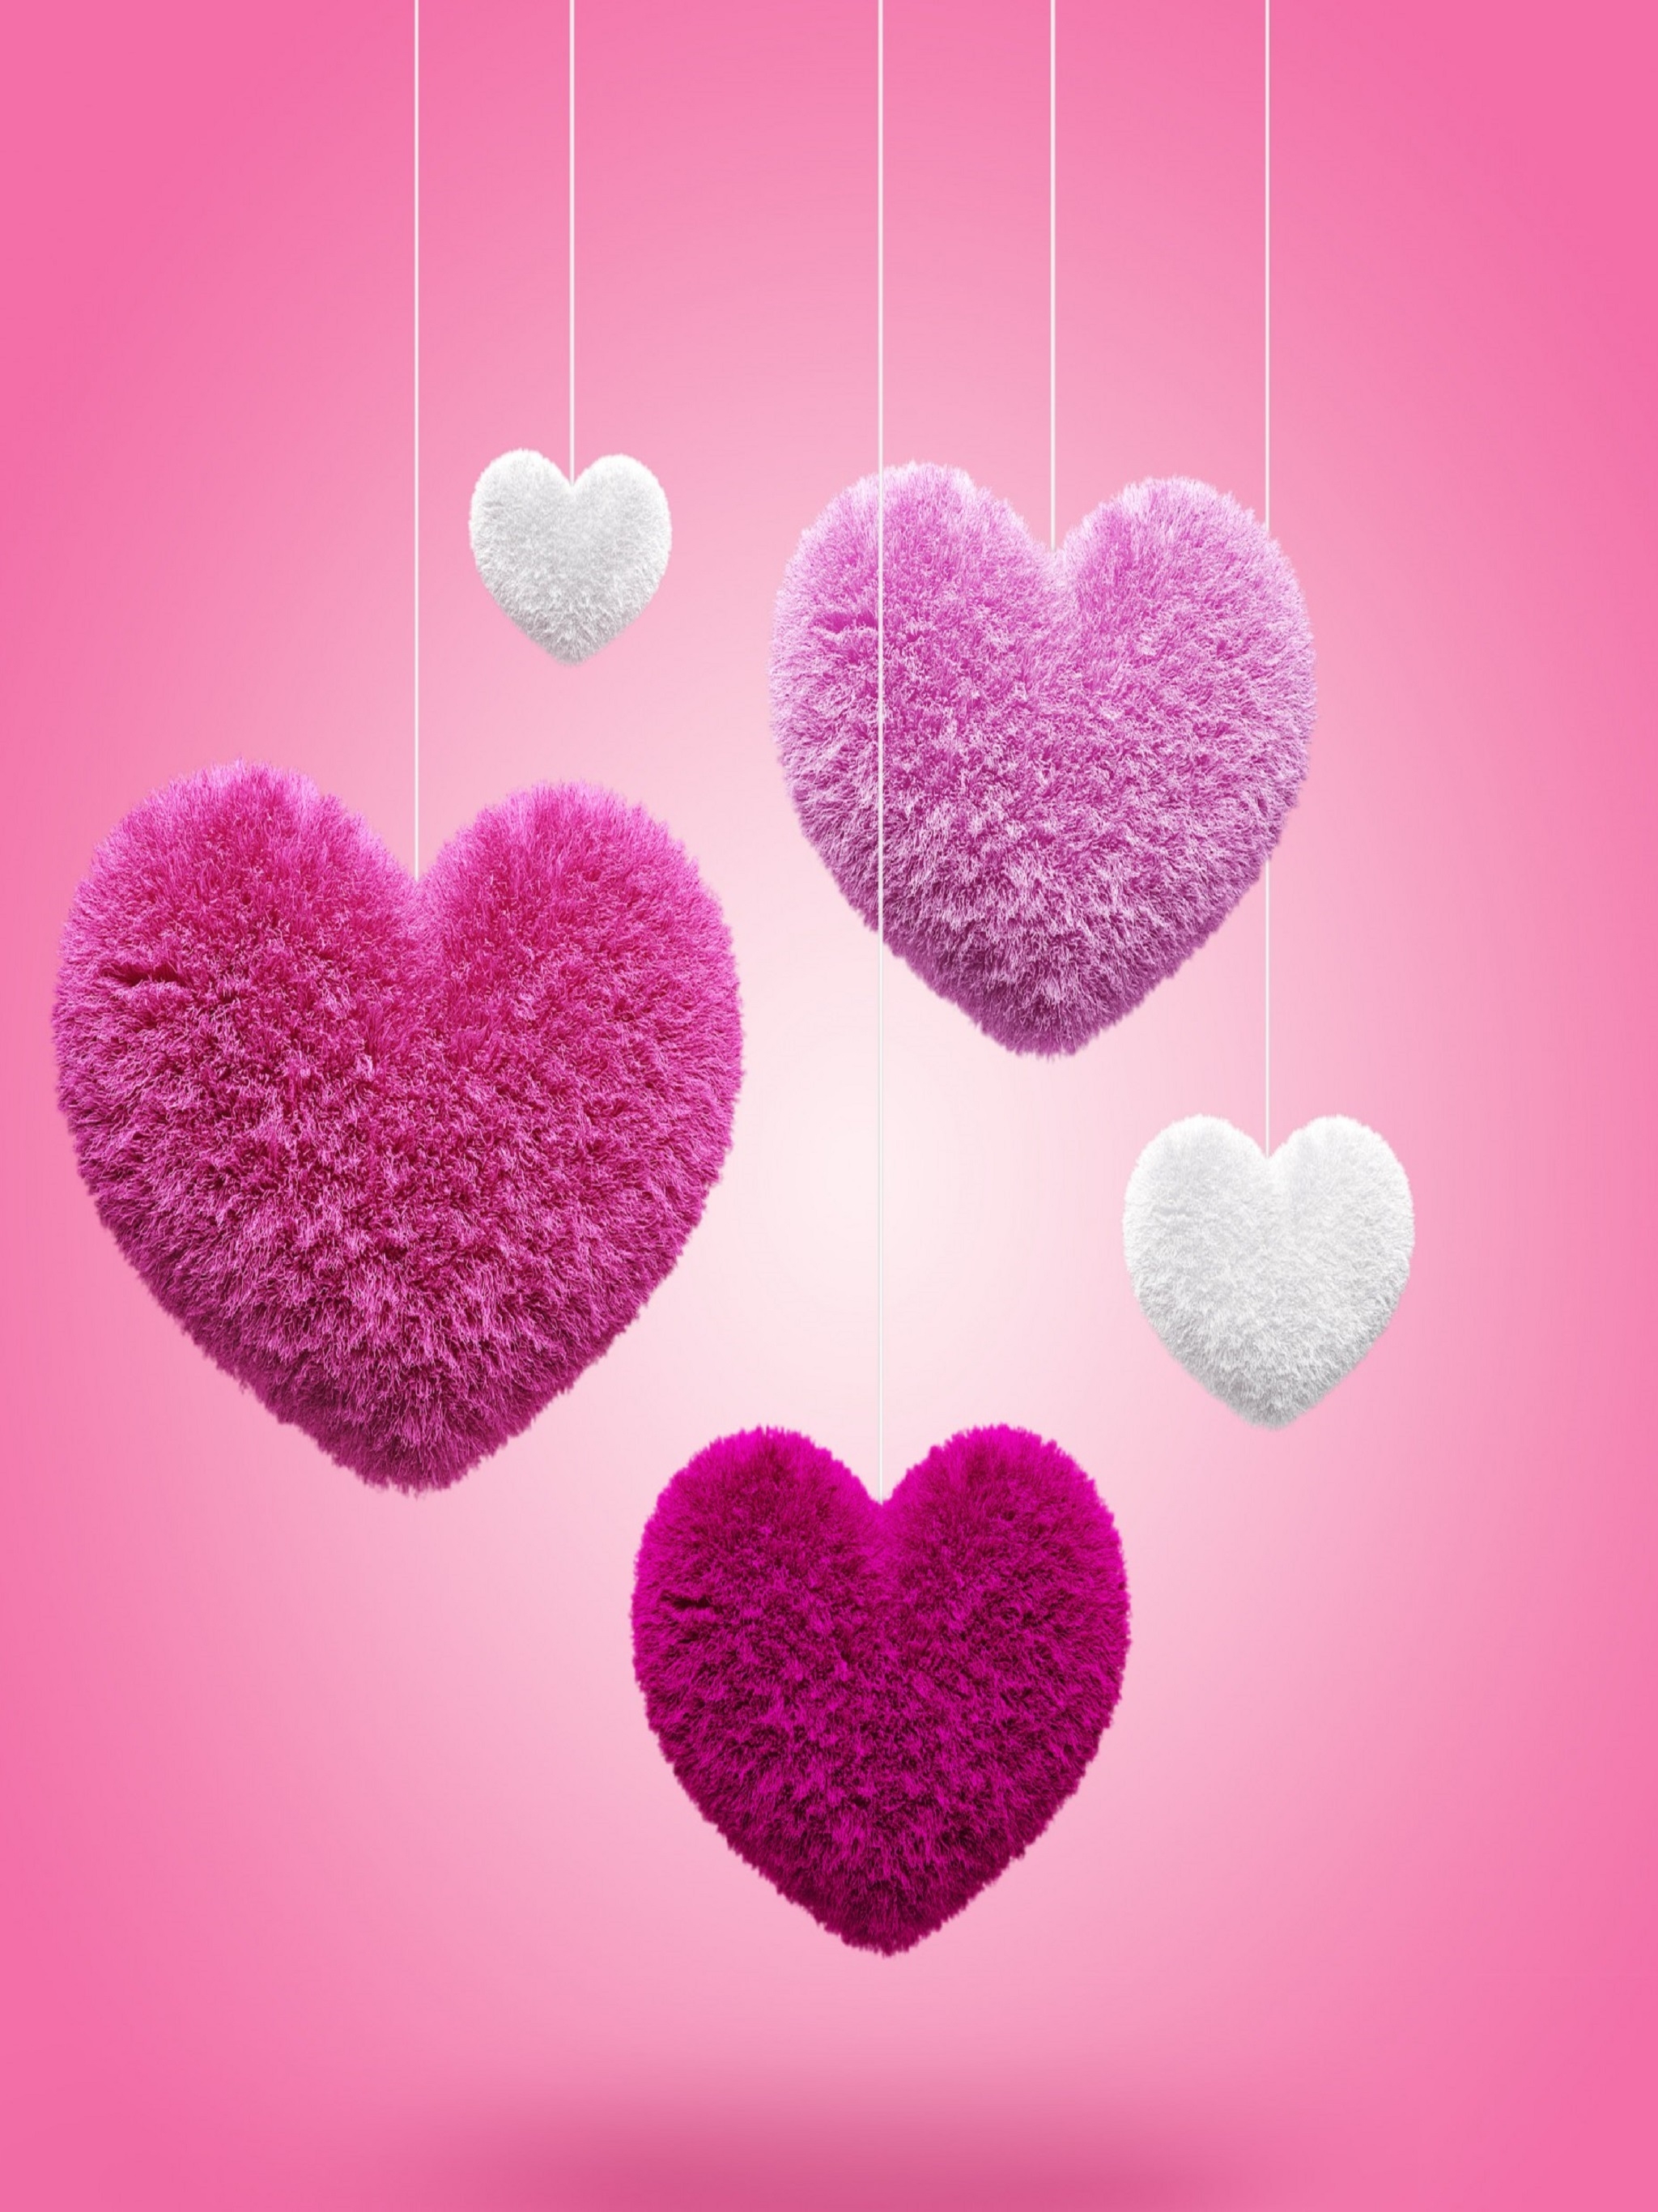 Fluffy Hearts for Apple iPad Pro resolution